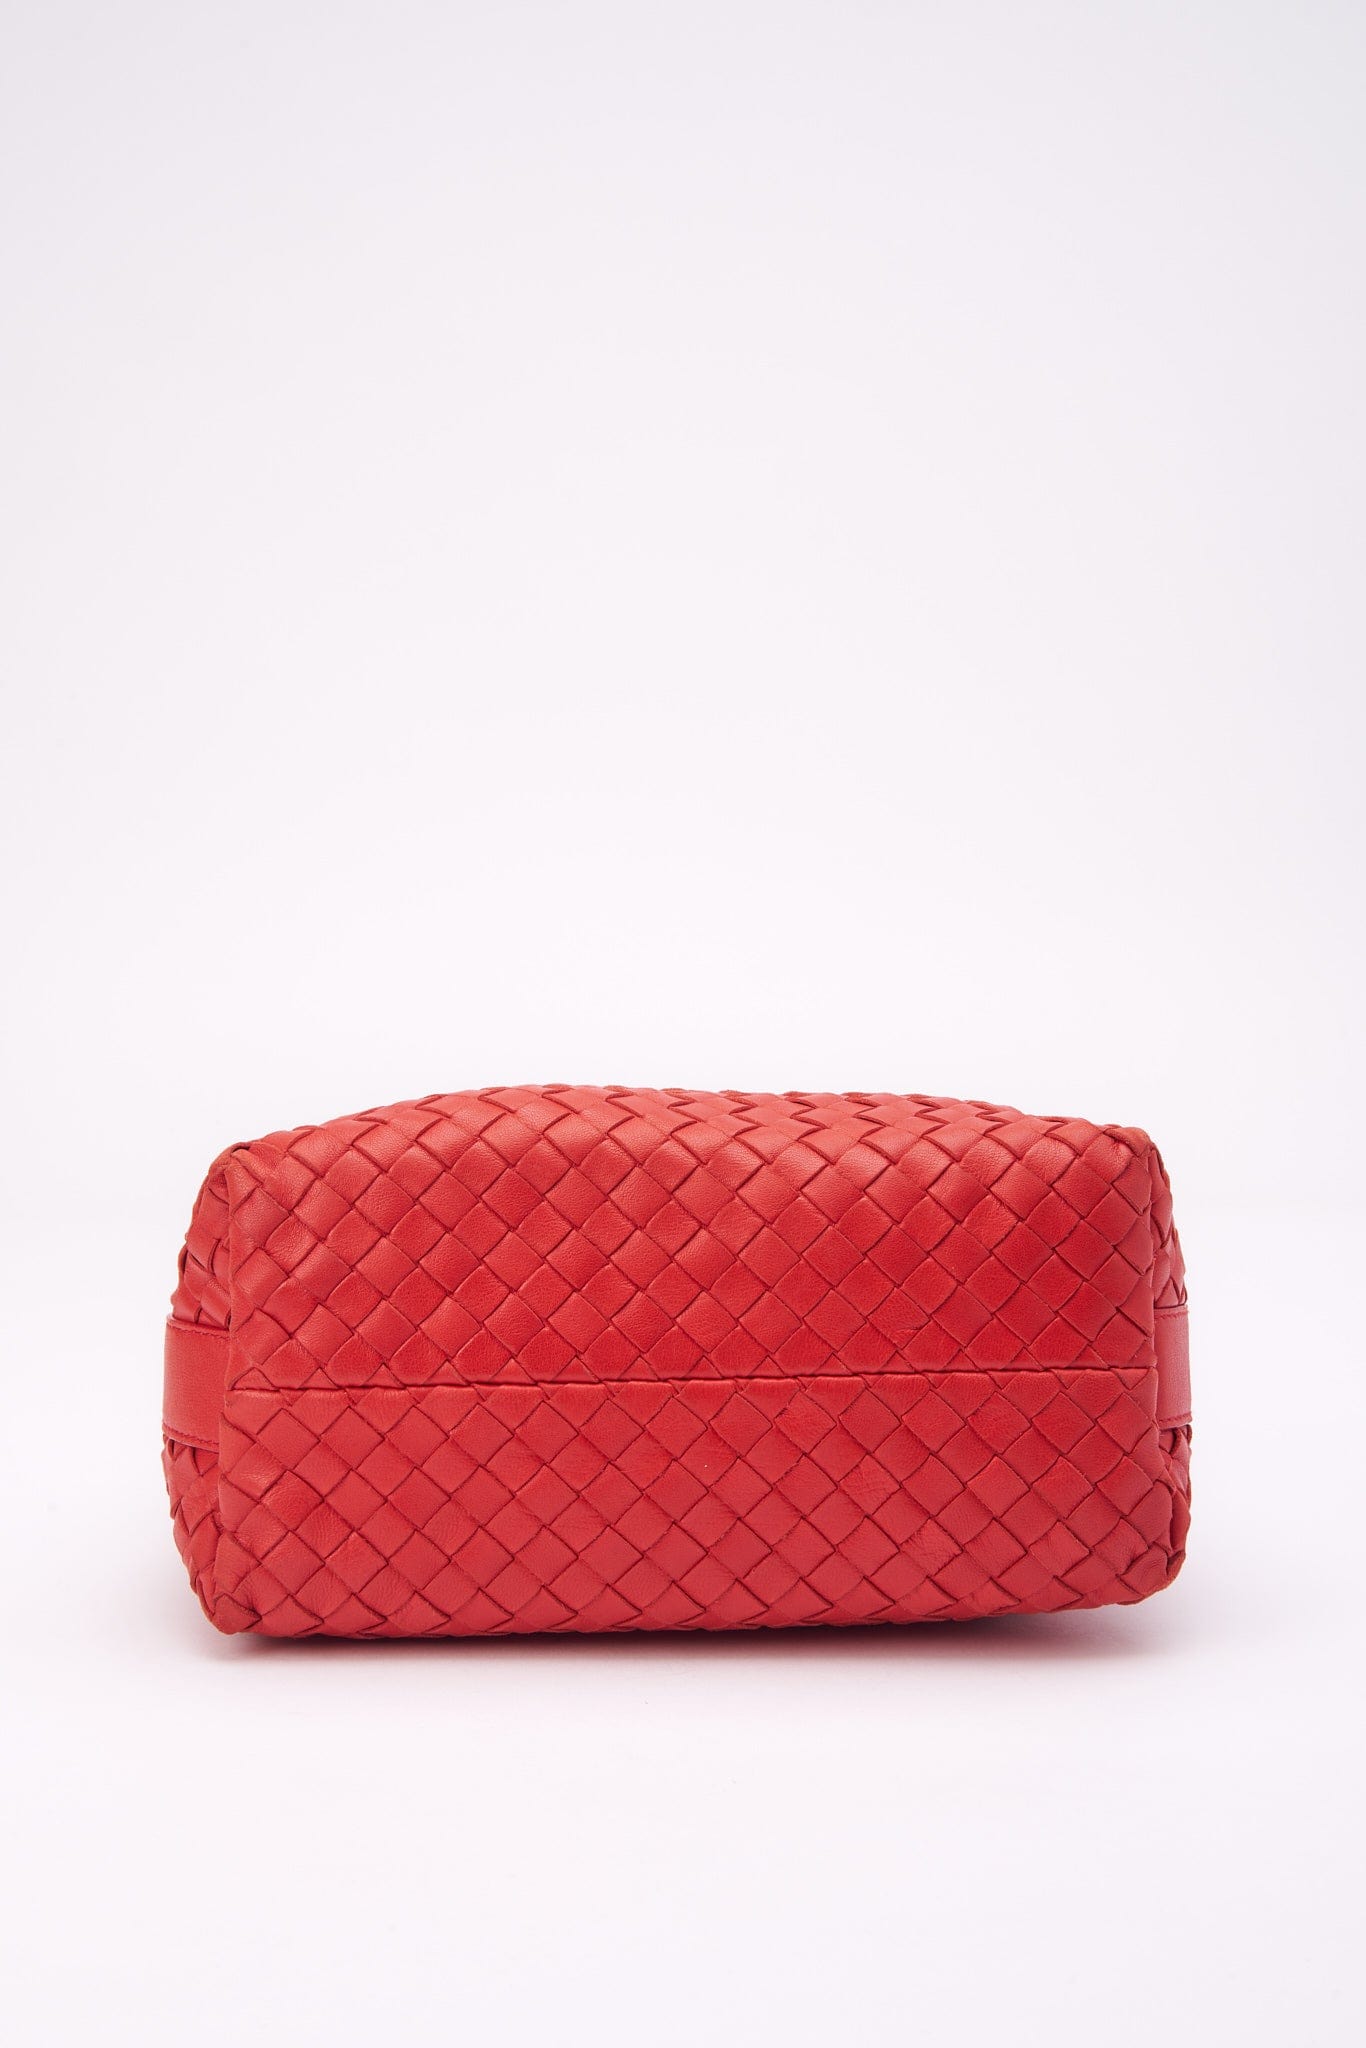 Vintage Bottega Veneta Red Intrecciato Leather Bag